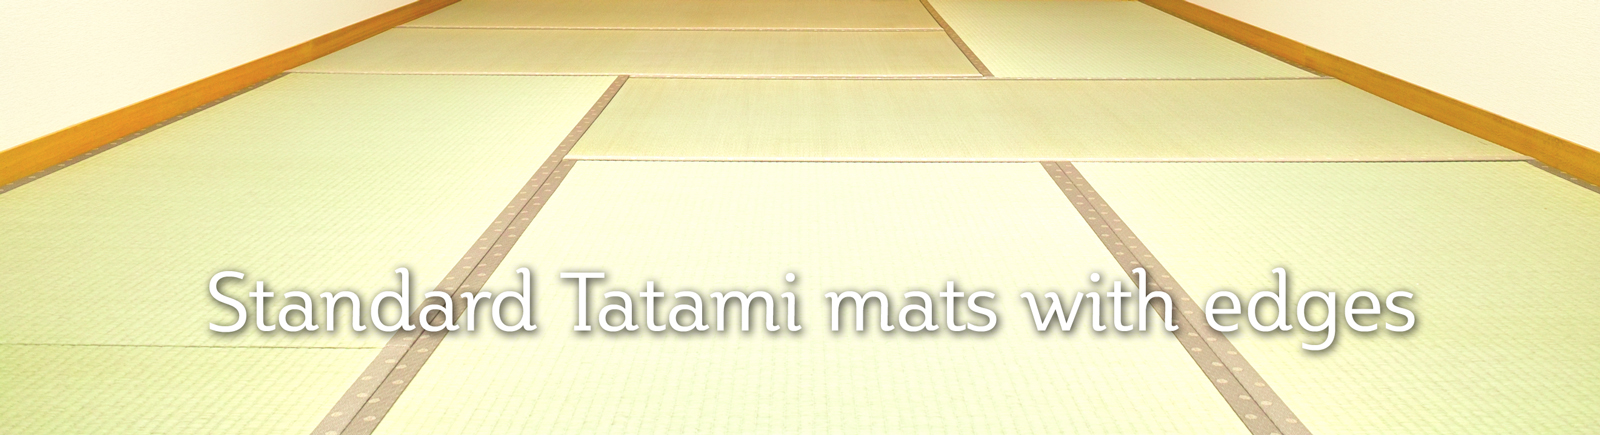 Standard Tatami mats with edges